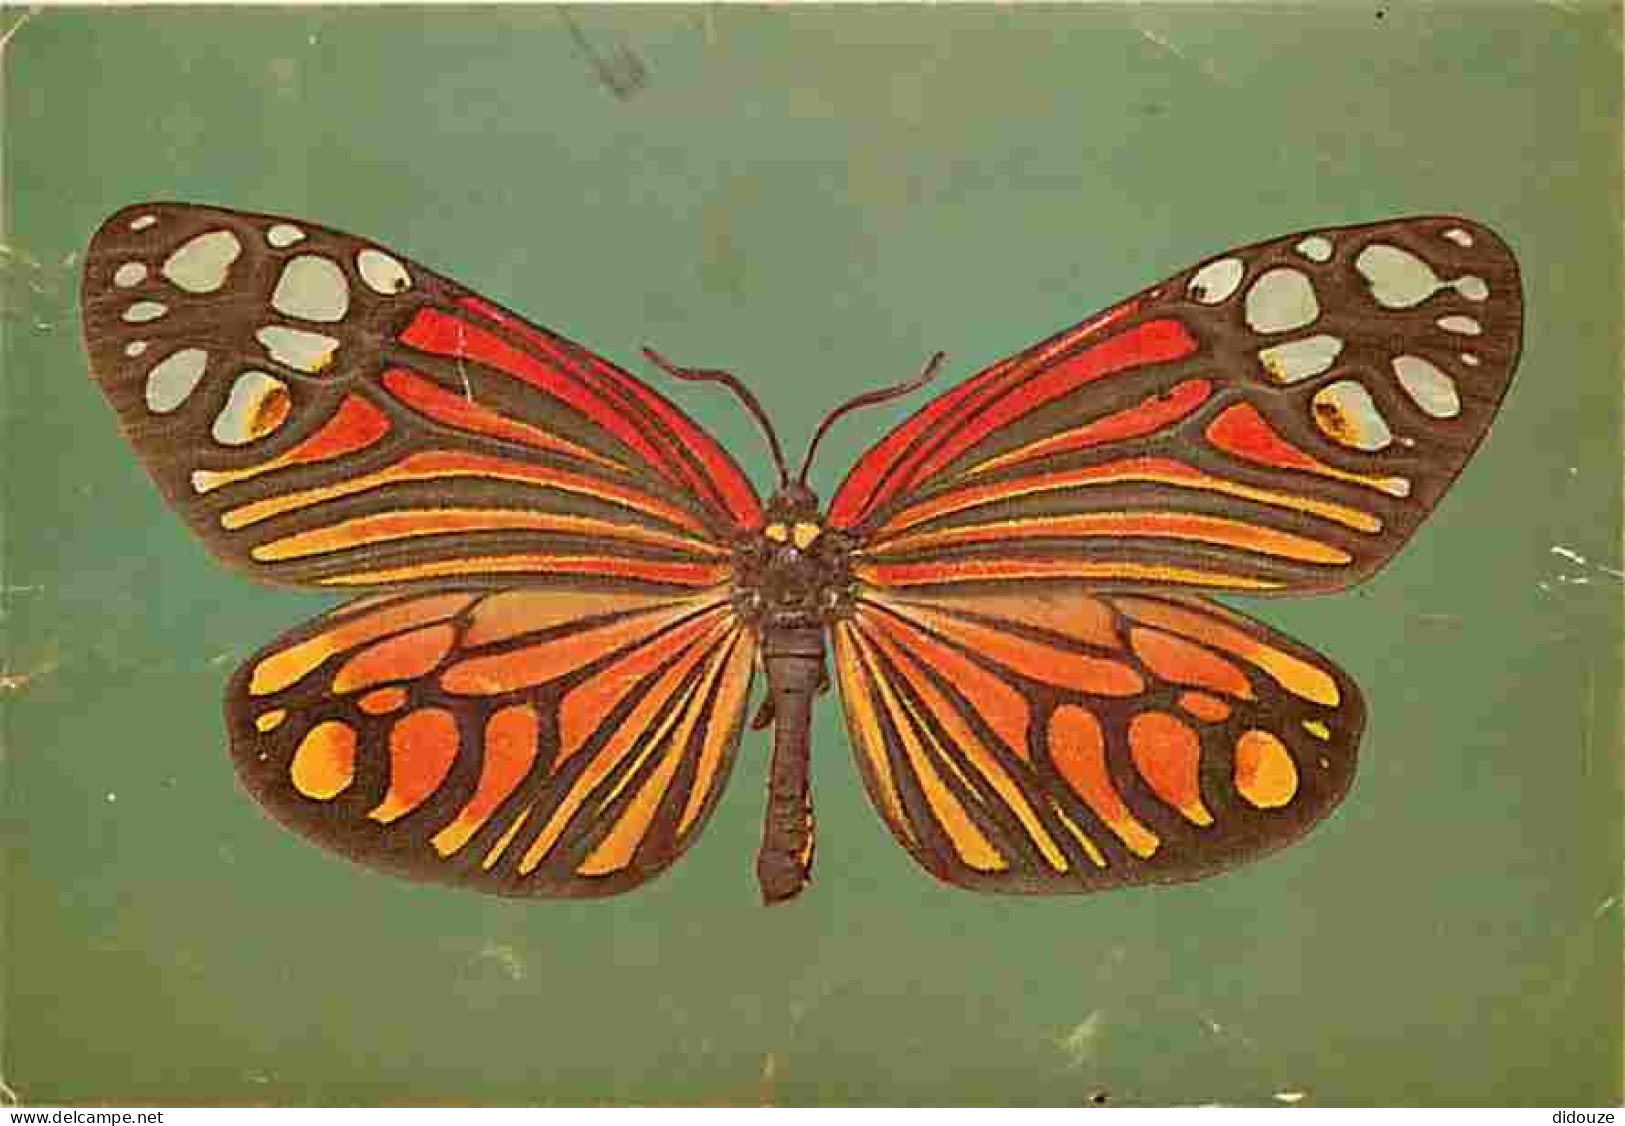 Animaux - Papillons - Tropical Moths - Campylotes Kotzschi - Zygaenidae - CPM - Voir Scans Recto-Verso - Vlinders